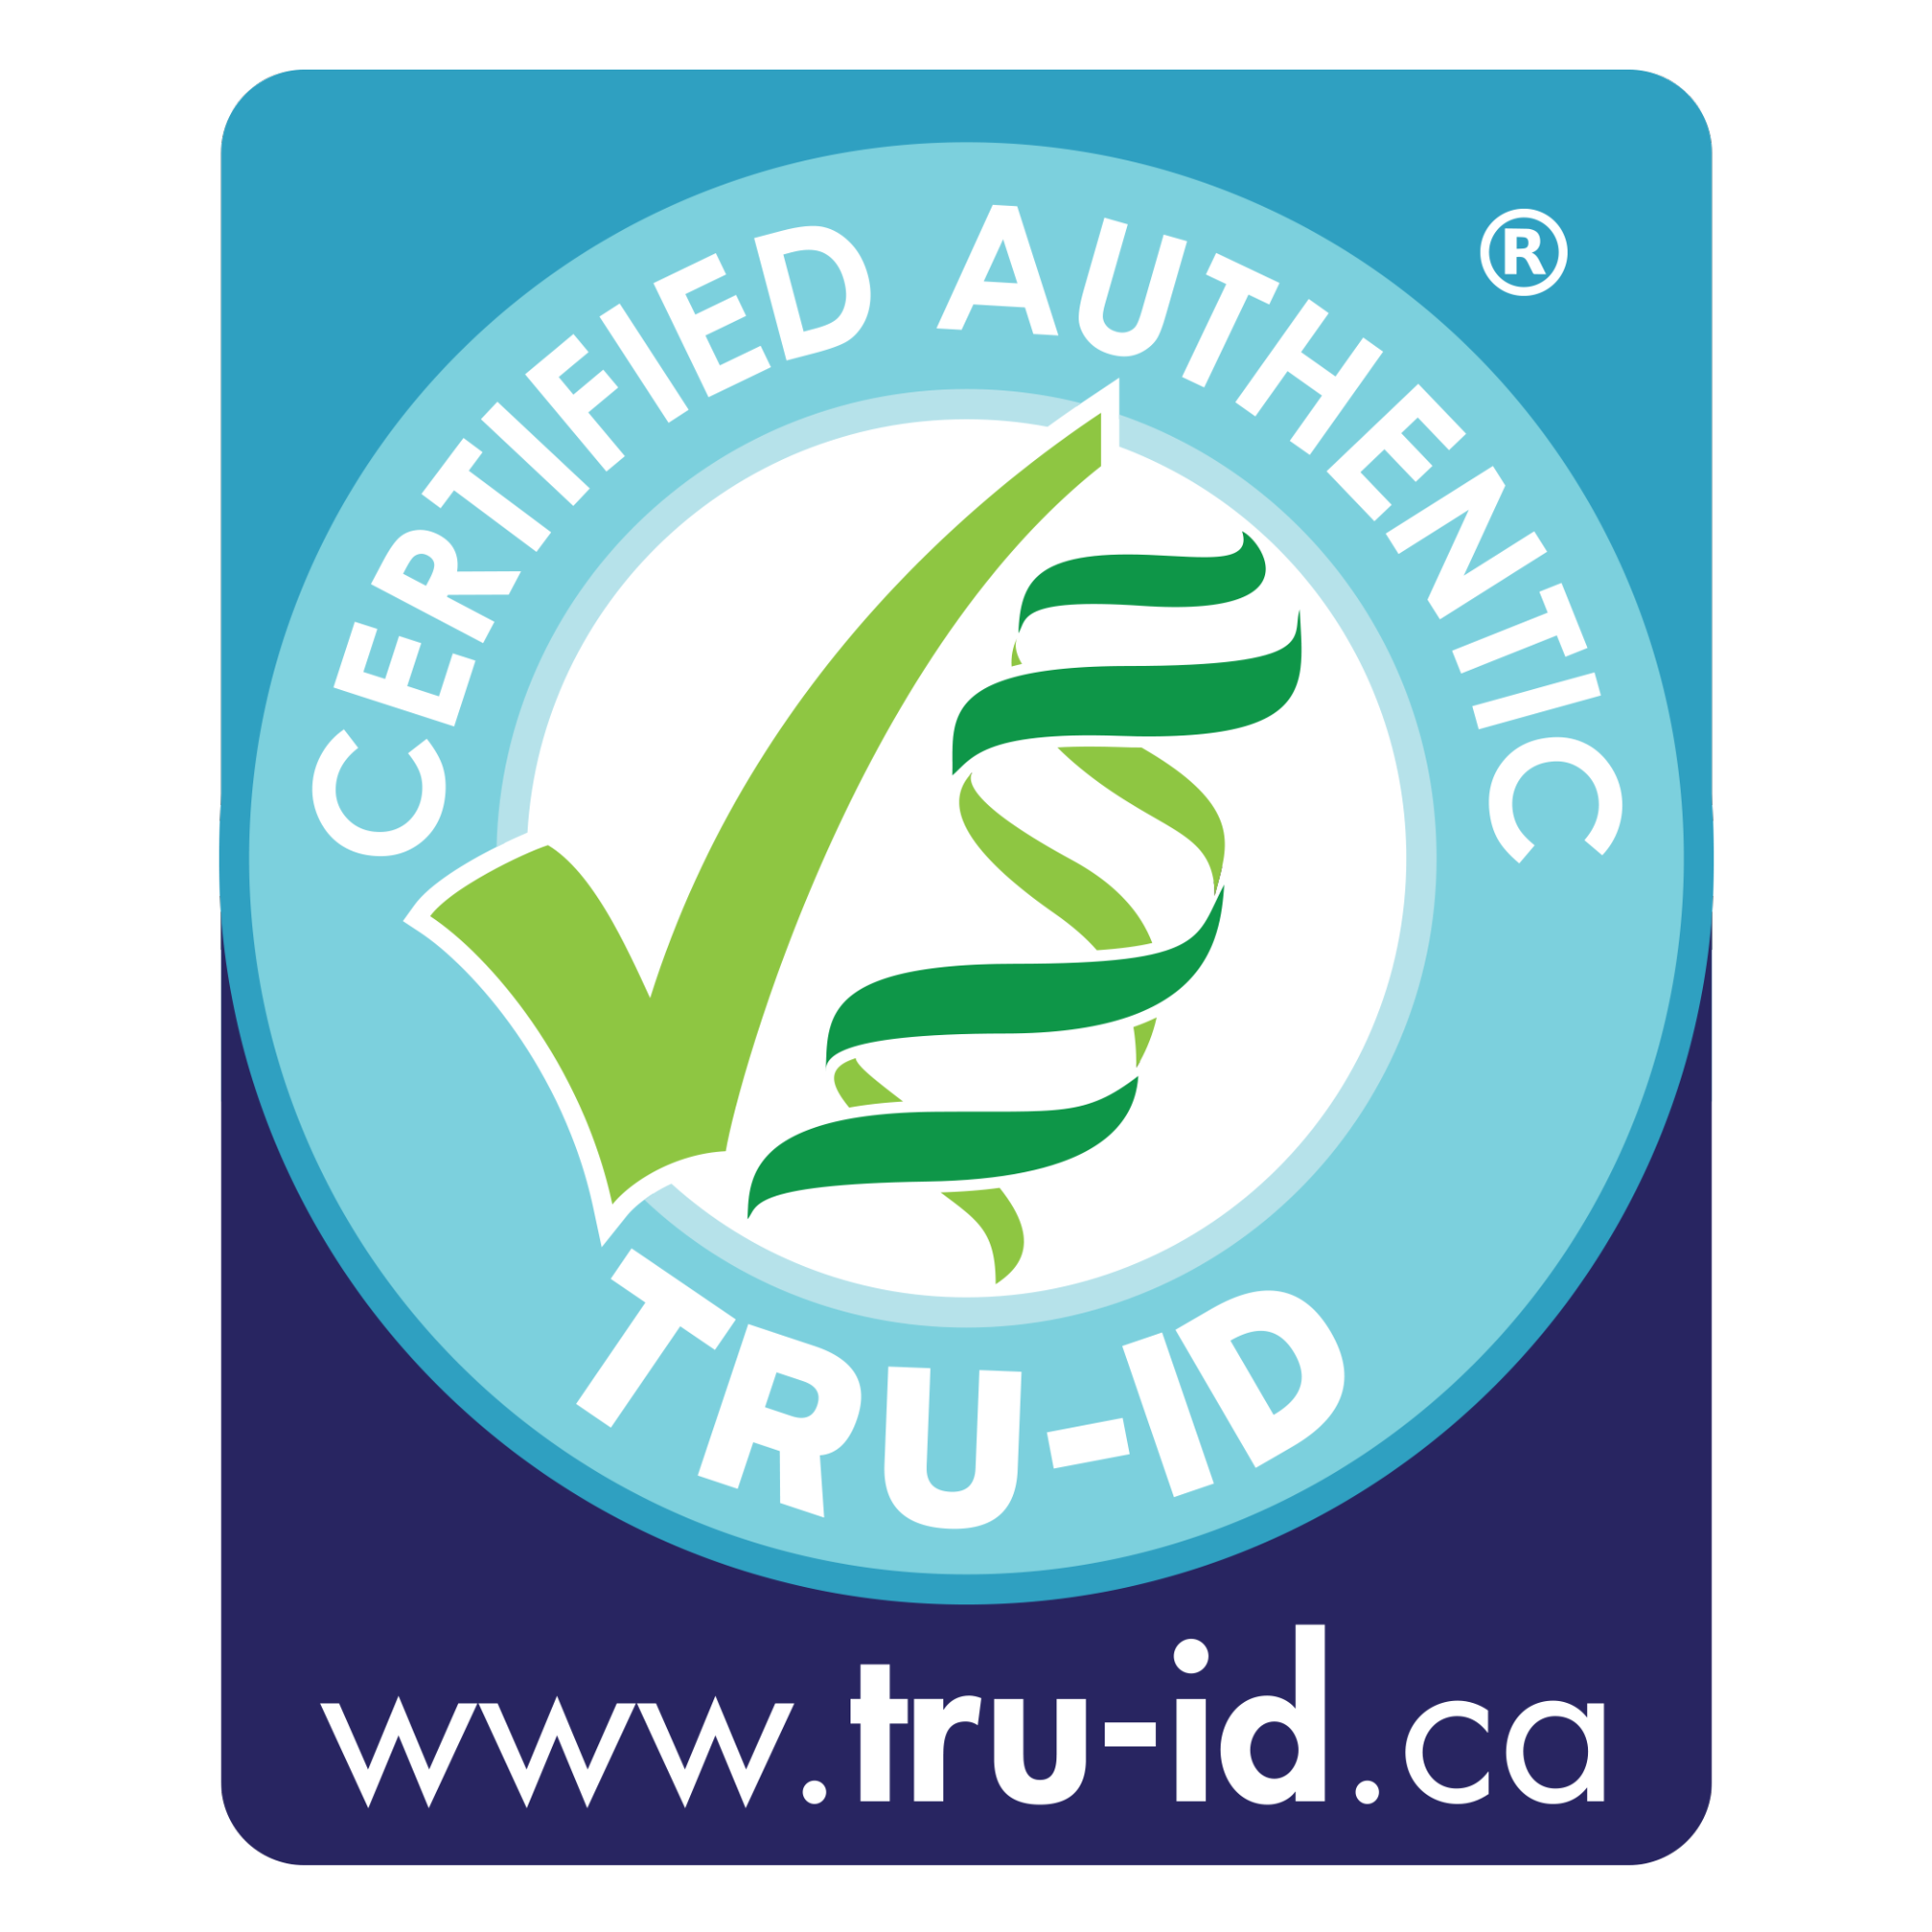 Tru-Id Certified Authentic logo